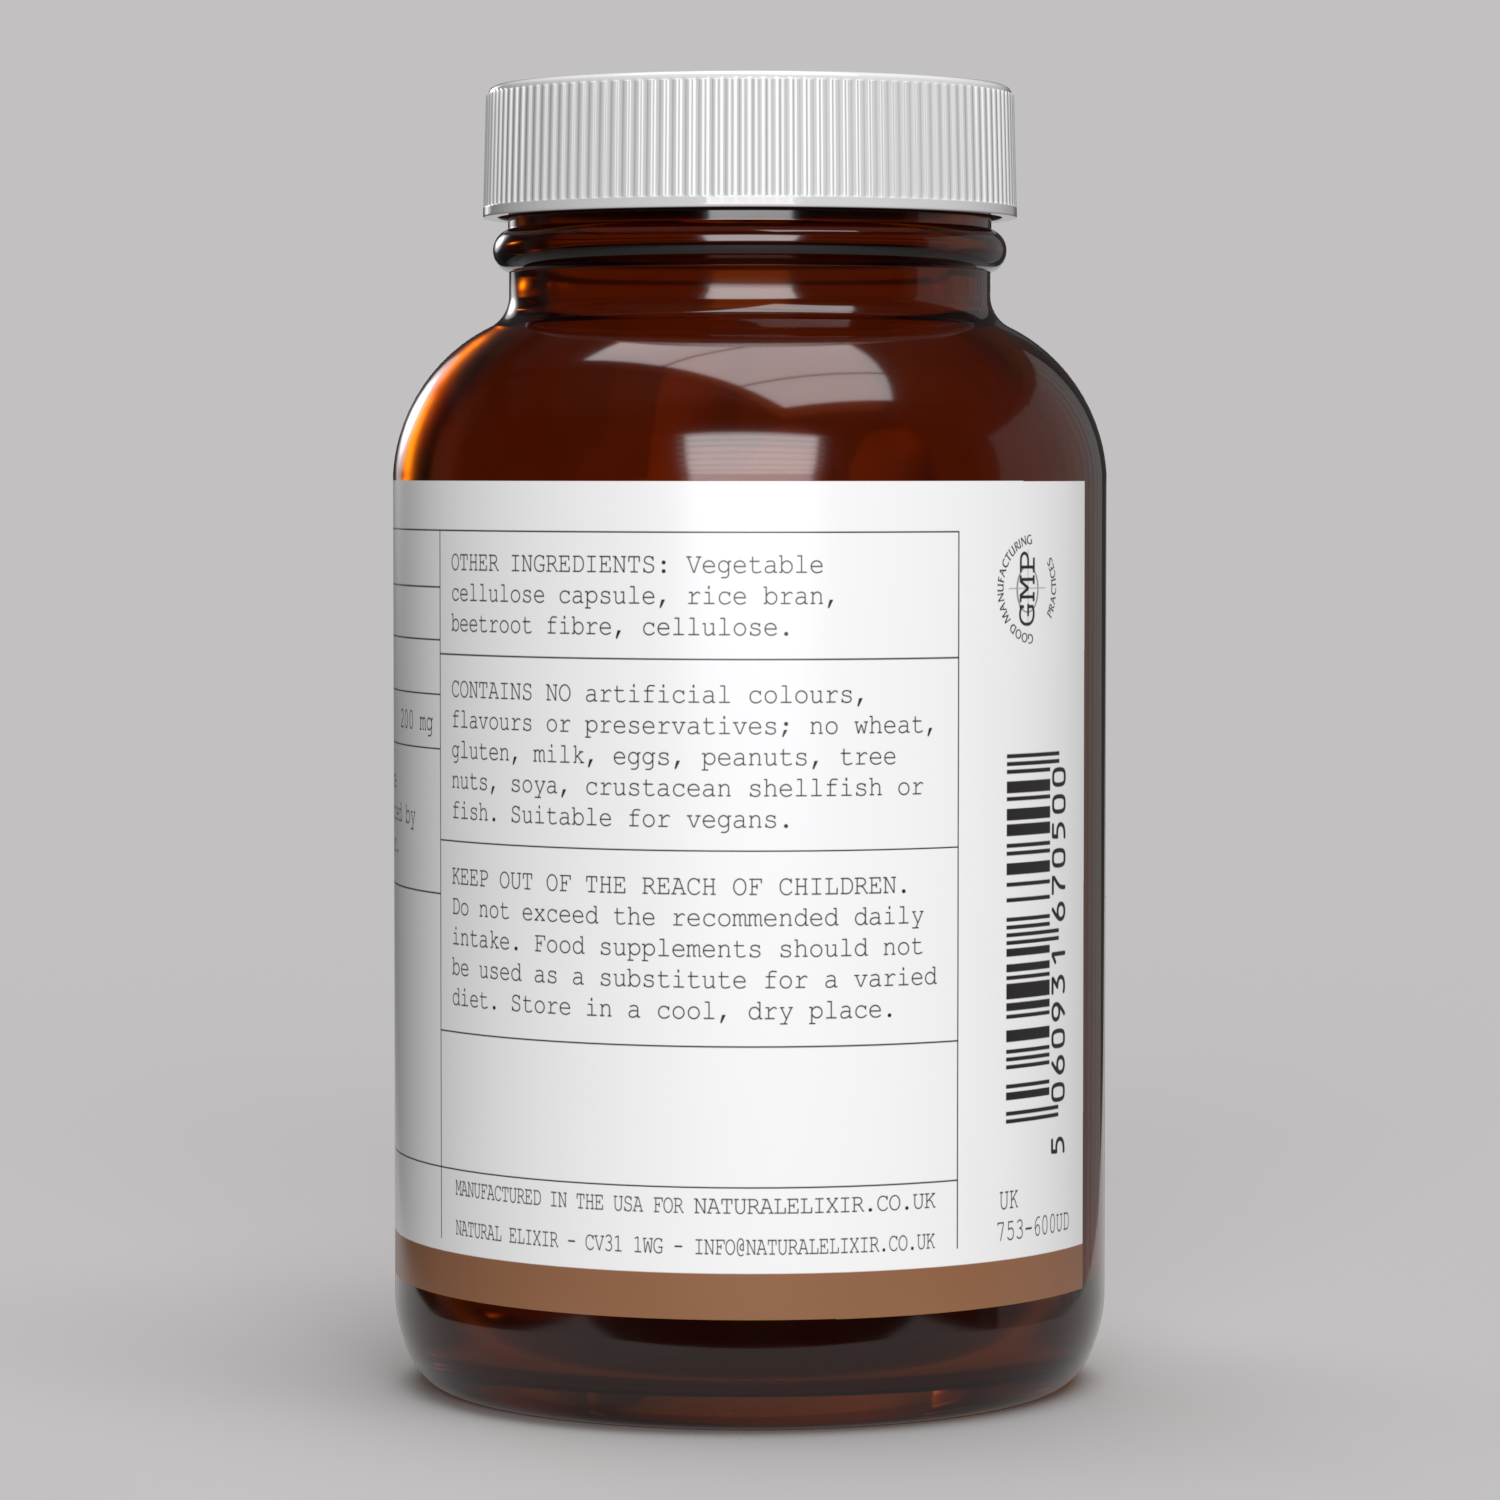 elixir/ L-Theanine 200 mg 60 Veg Caps